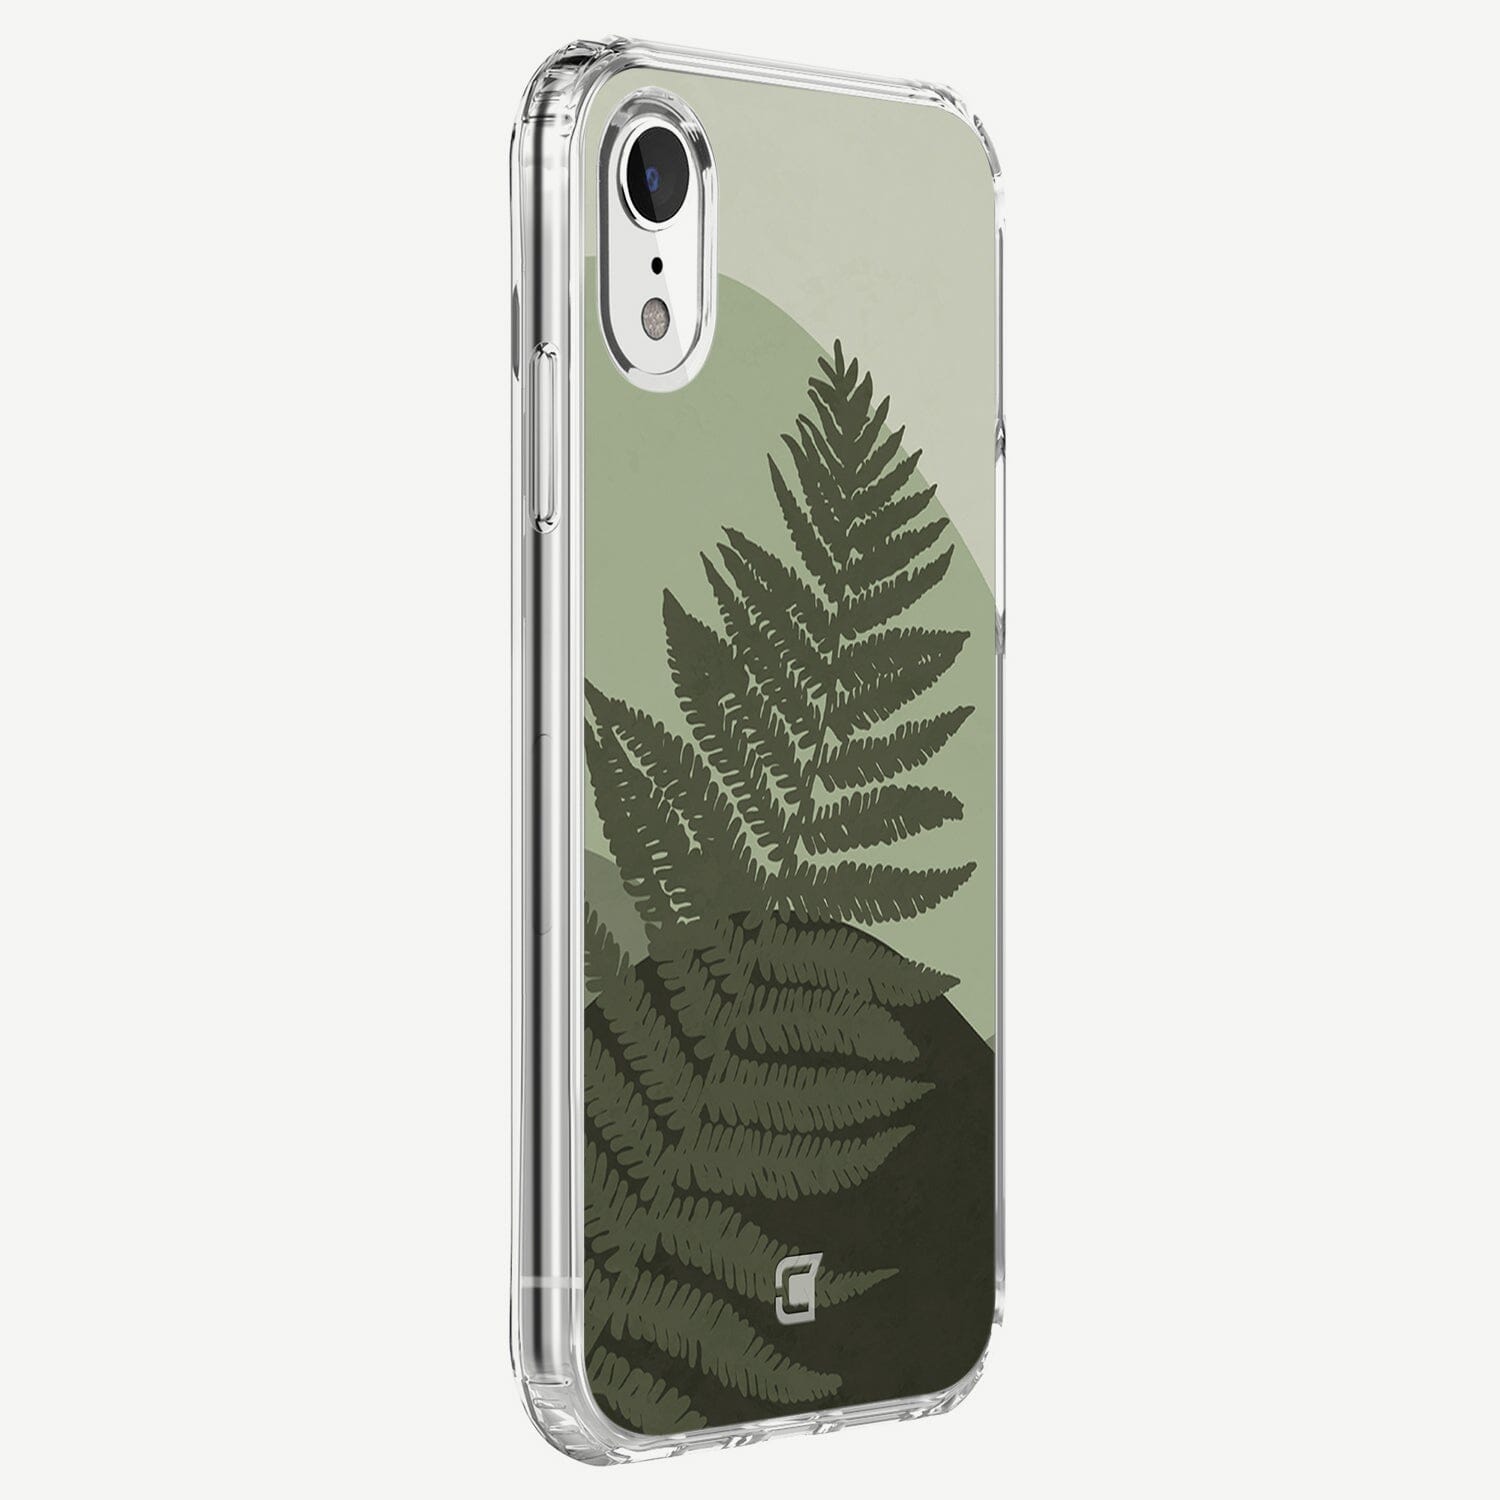 iPhone XR Case - Fern Leaf Design